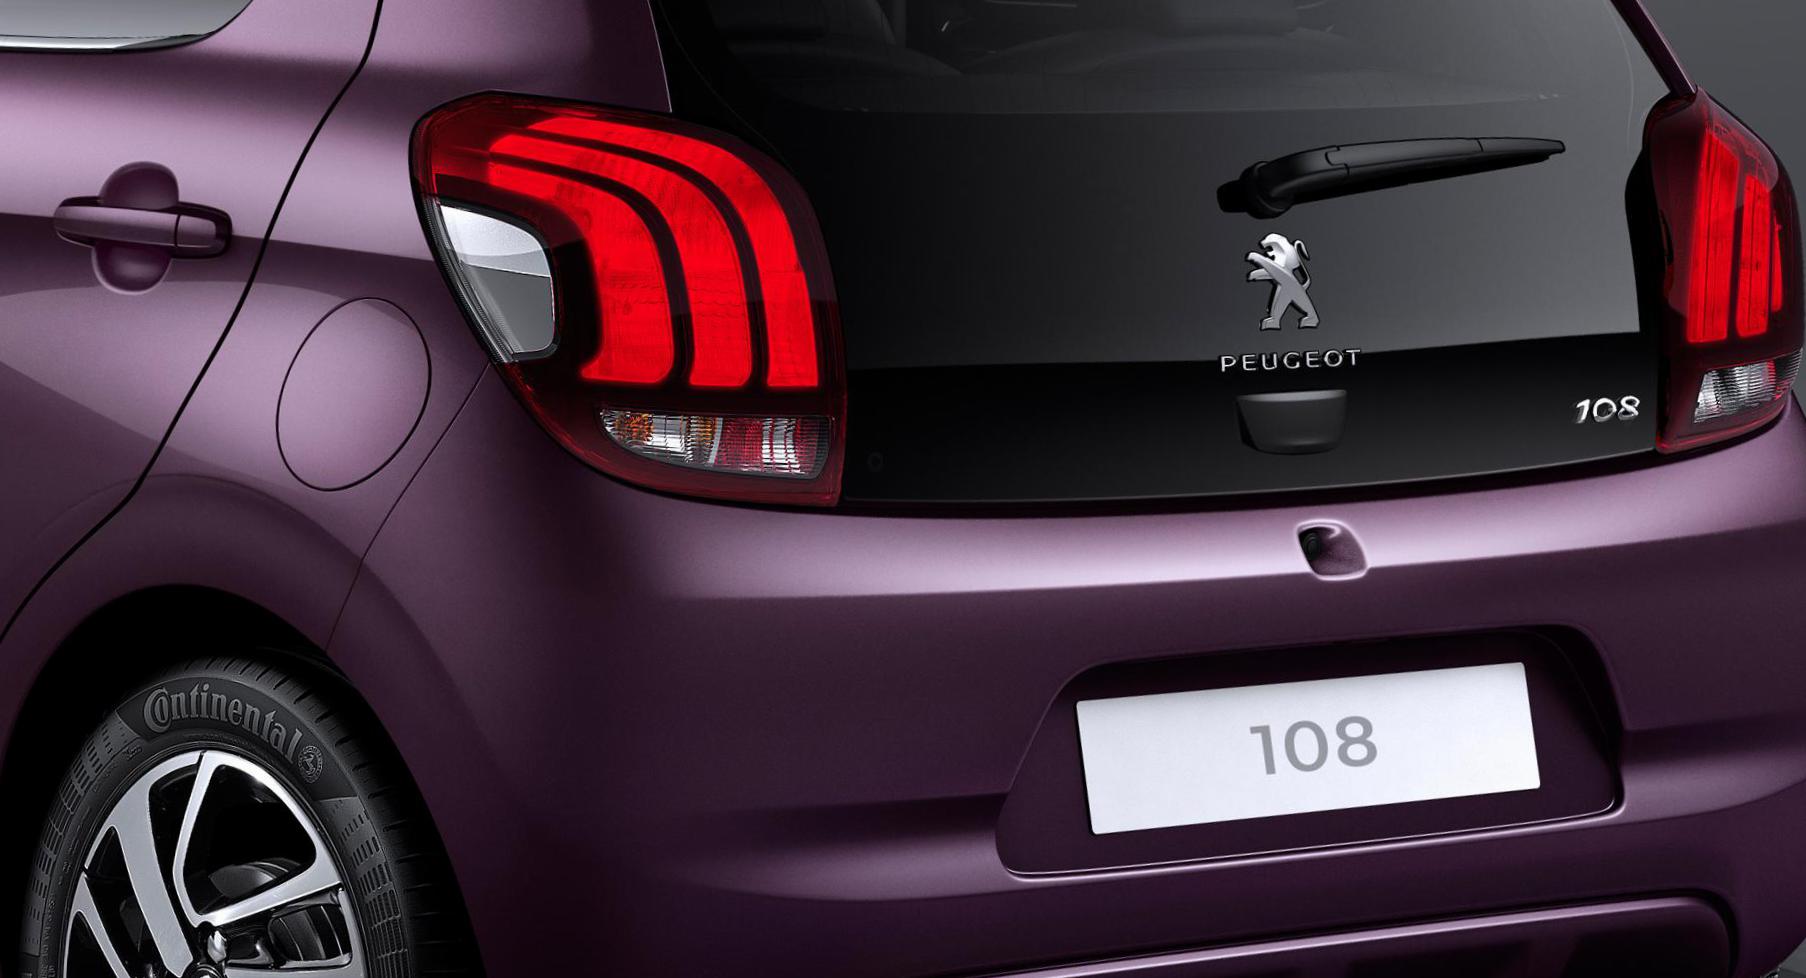 108 3 doors Peugeot parts hatchback